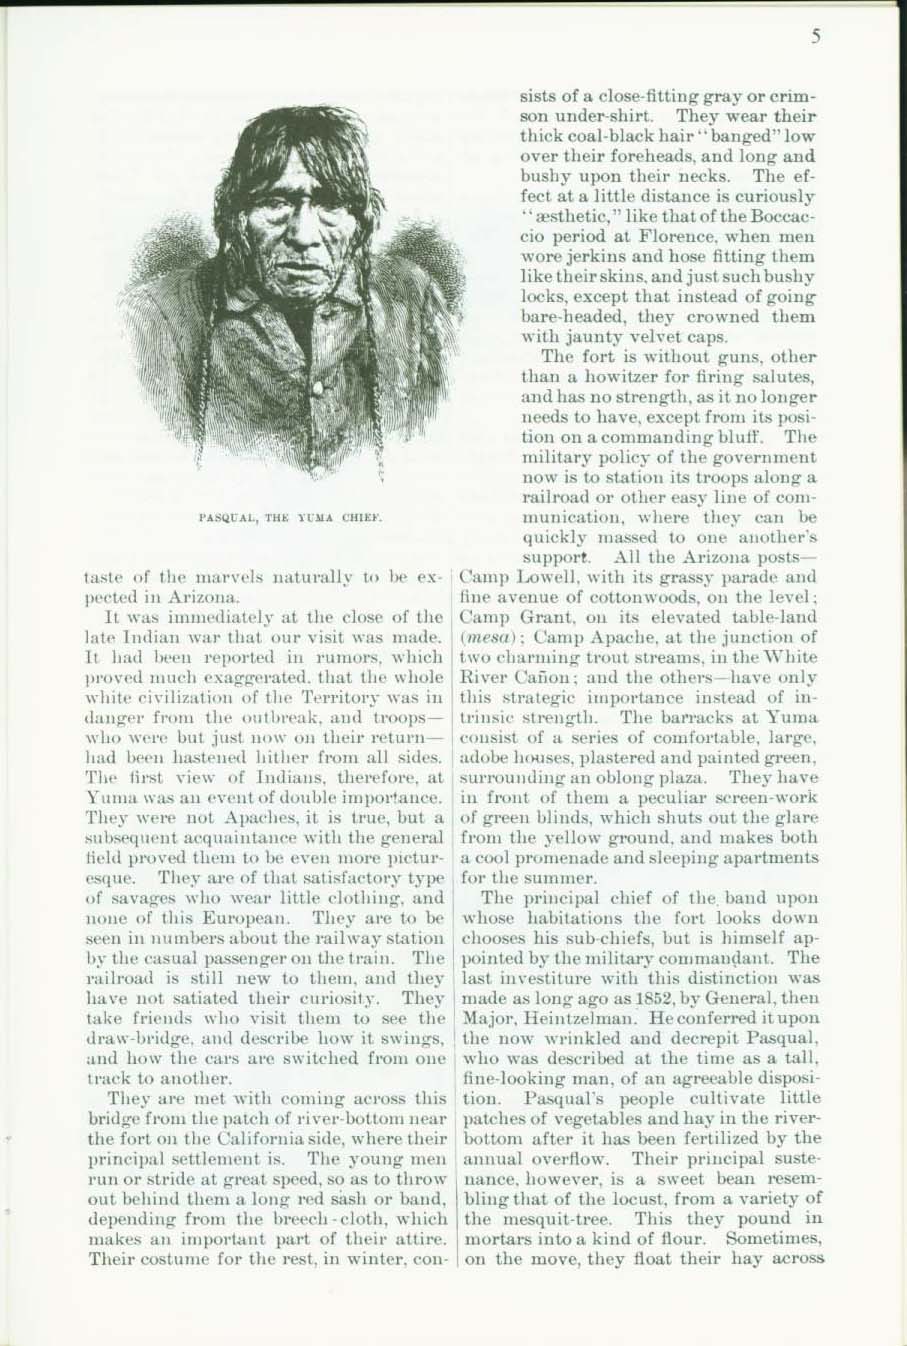 ACROSS ARIZONA IN 1883 including glimpses of Yuma, Tucson, Tombstone. vist0011b